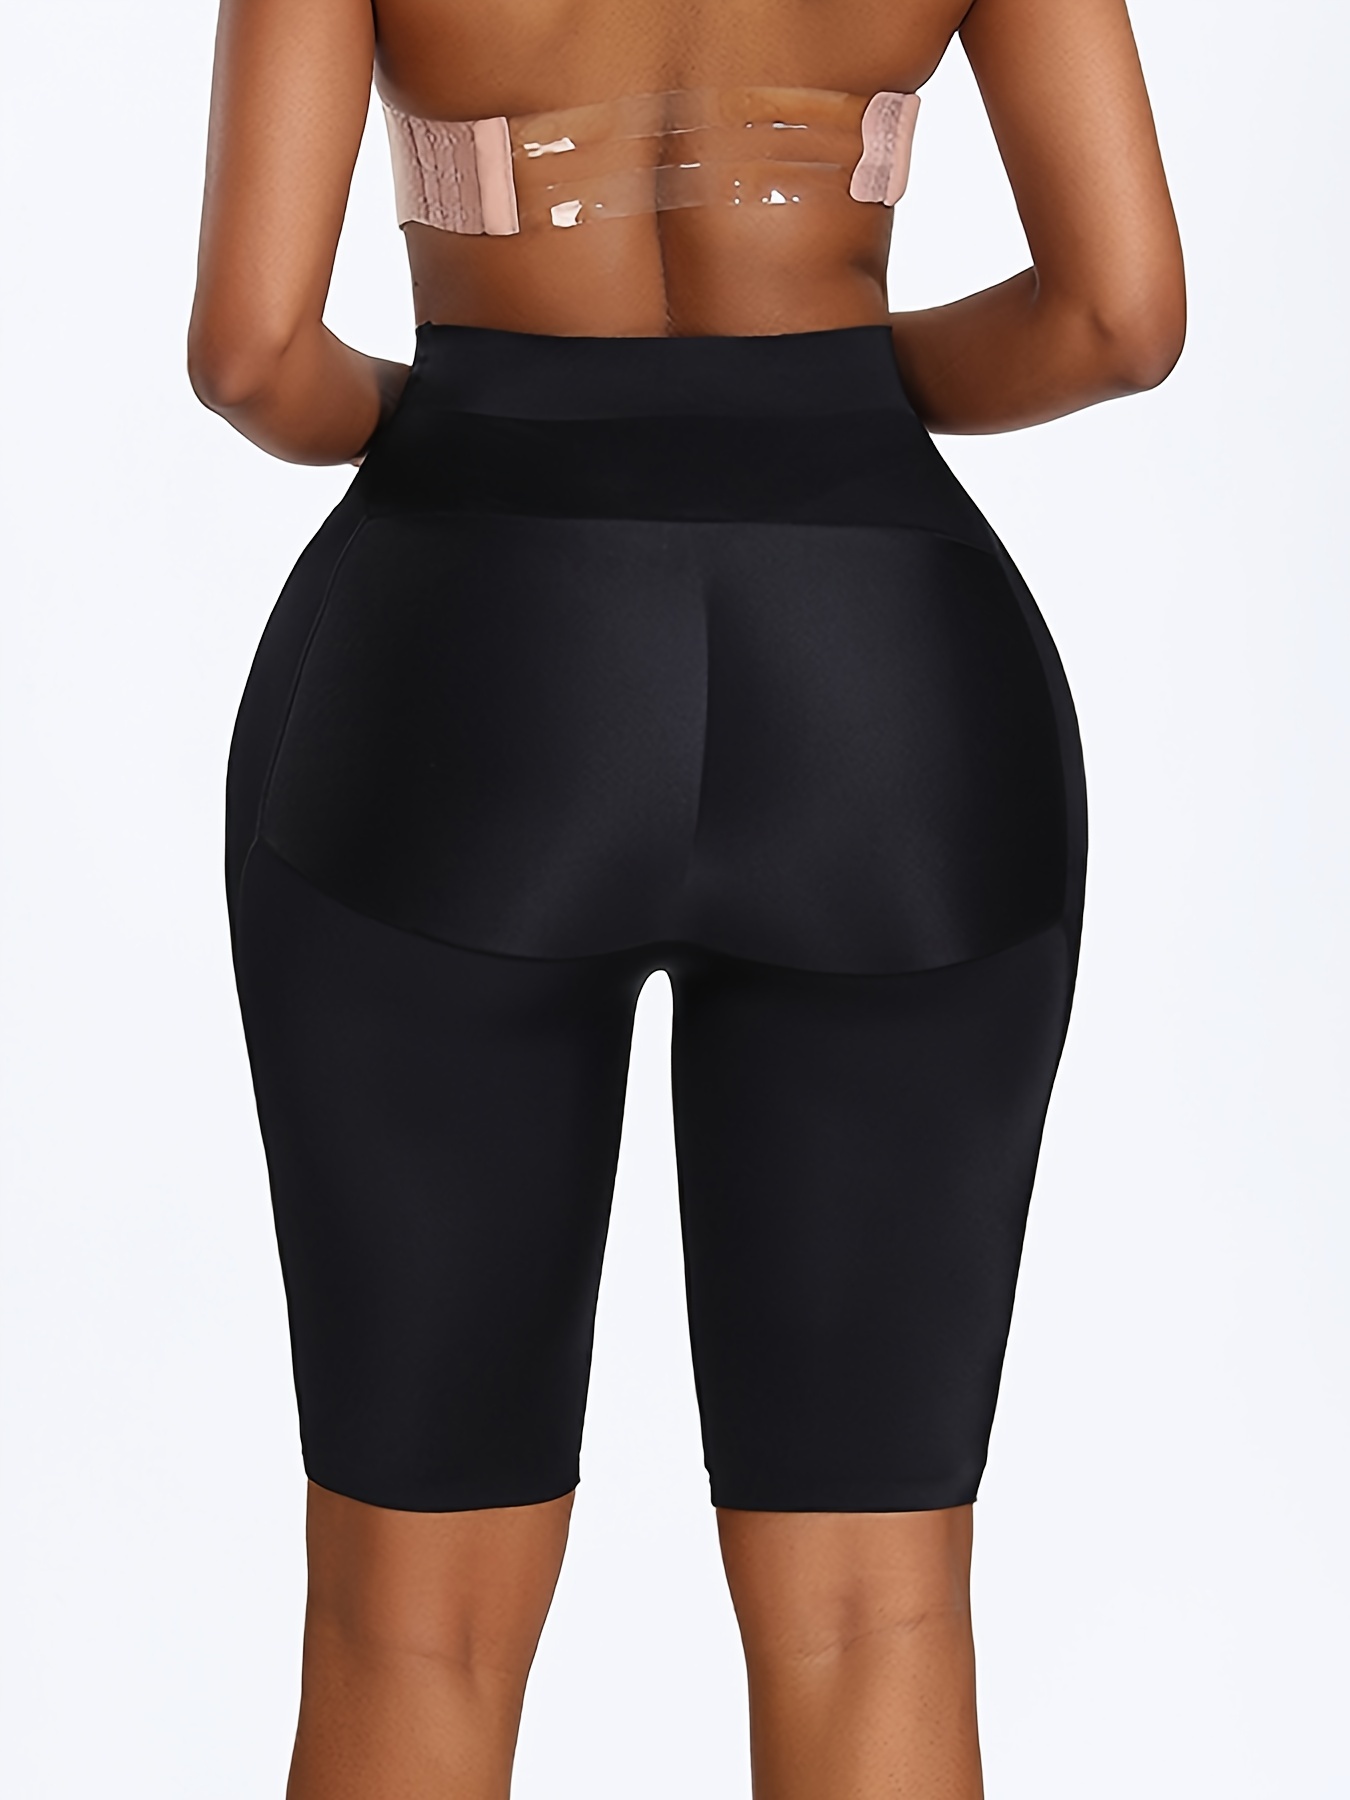 Women Tummy Control Panties Slimming Underwear Hip Lift Body Shaper Safety Slip  Shorts Under Skirt Anti Chafing Boxer S-3XL - AliExpress